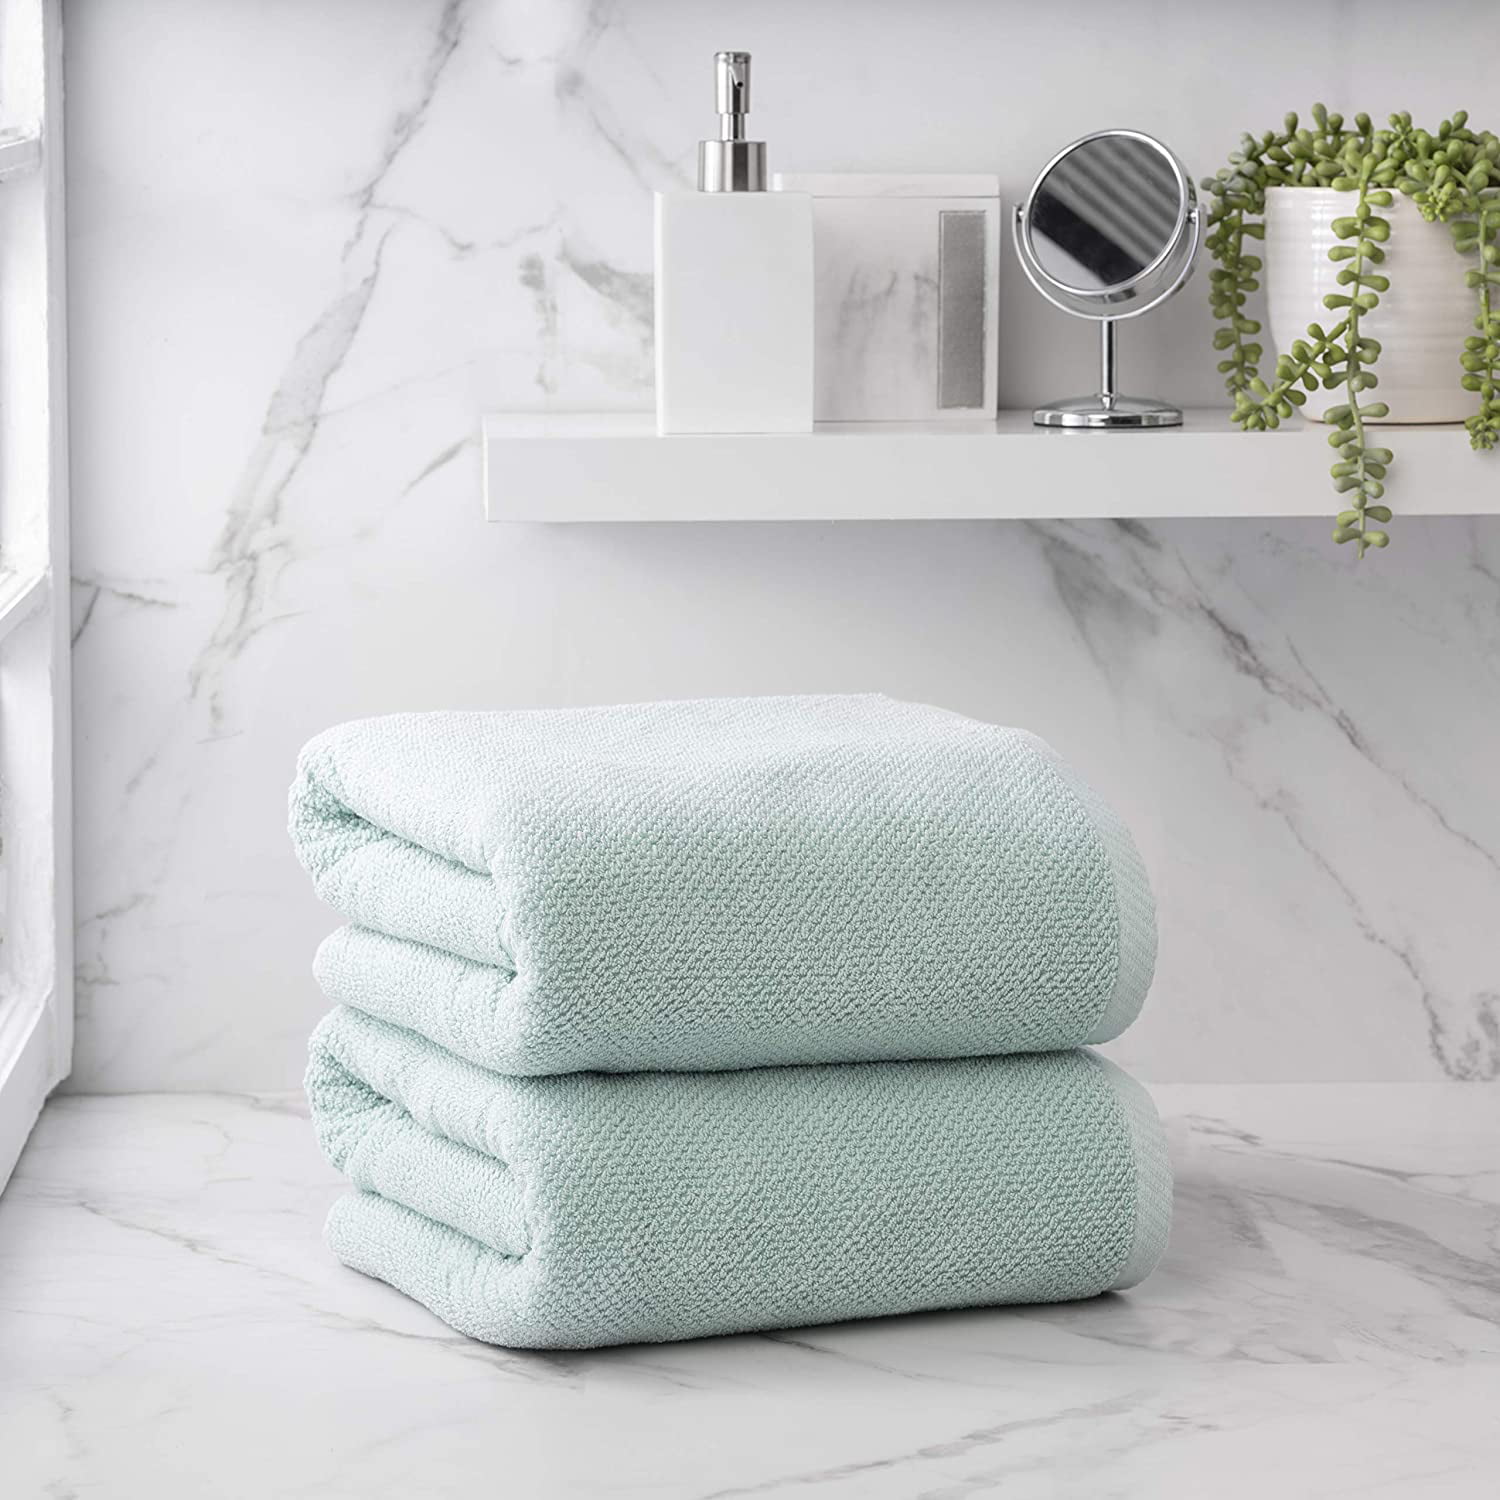 600 GSM 100% Cotton Bath Linen Set Welhome Franklin Premium Soft & Absorbent Popcorn Textured Charcoal Gray Bathroom Towels 4 Piece Bath Towel Sets Hotel & Spa Towels for Bathroom